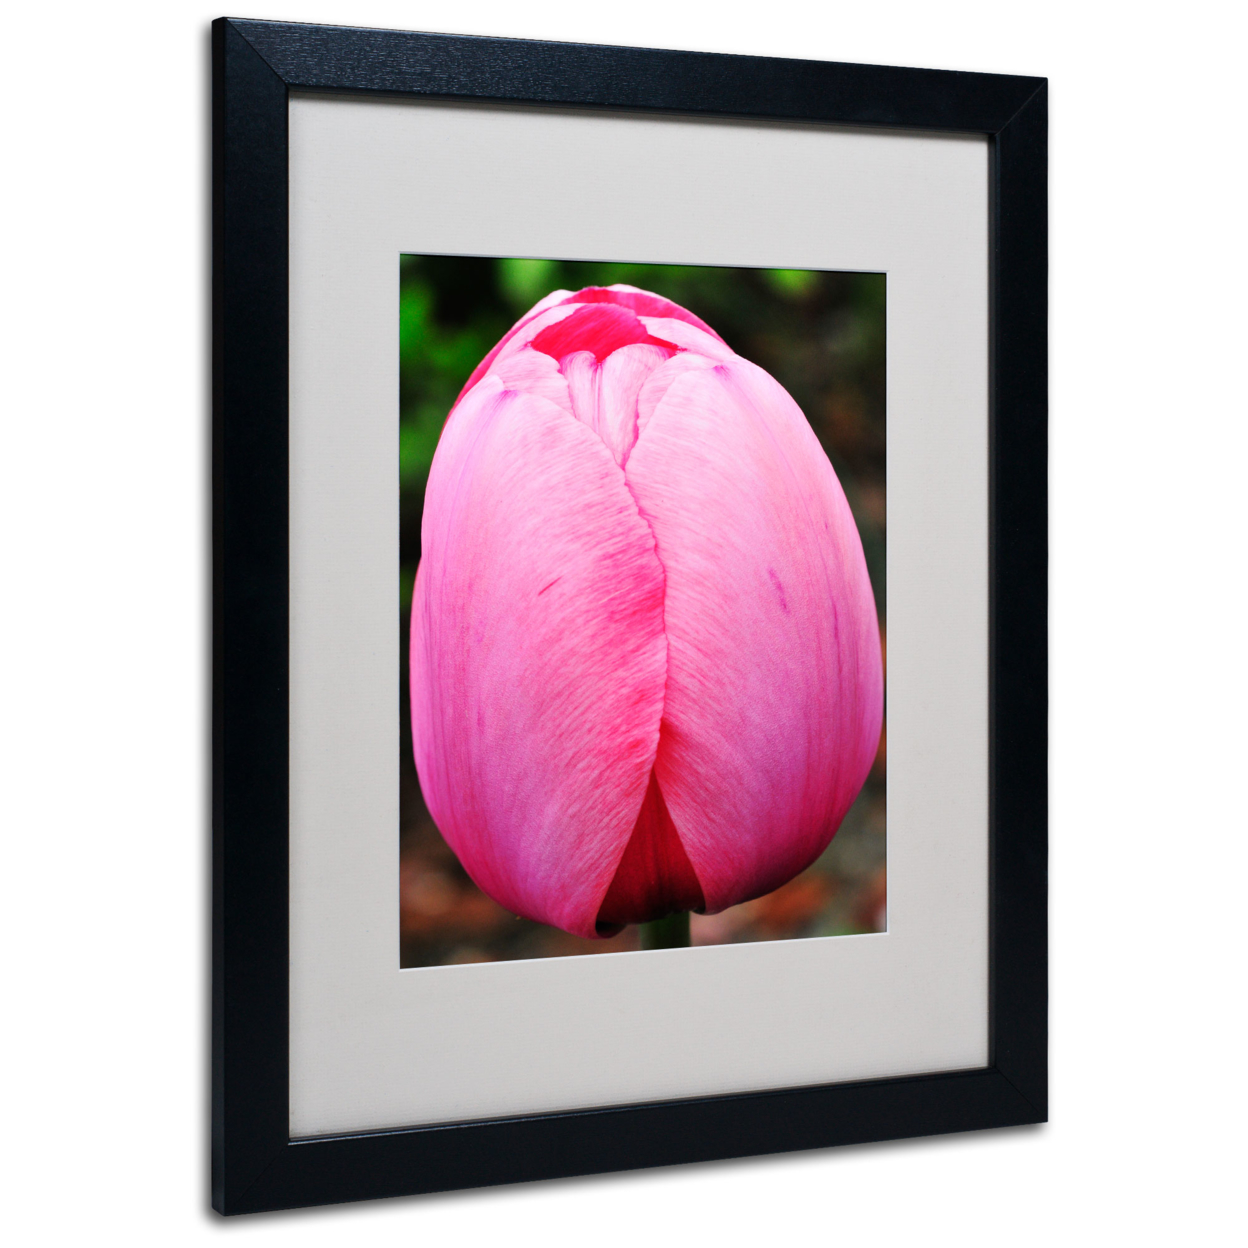 Kurt Shaffer 'Perfect Pink Tulip' Black Wooden Framed Art 18 X 22 Inches